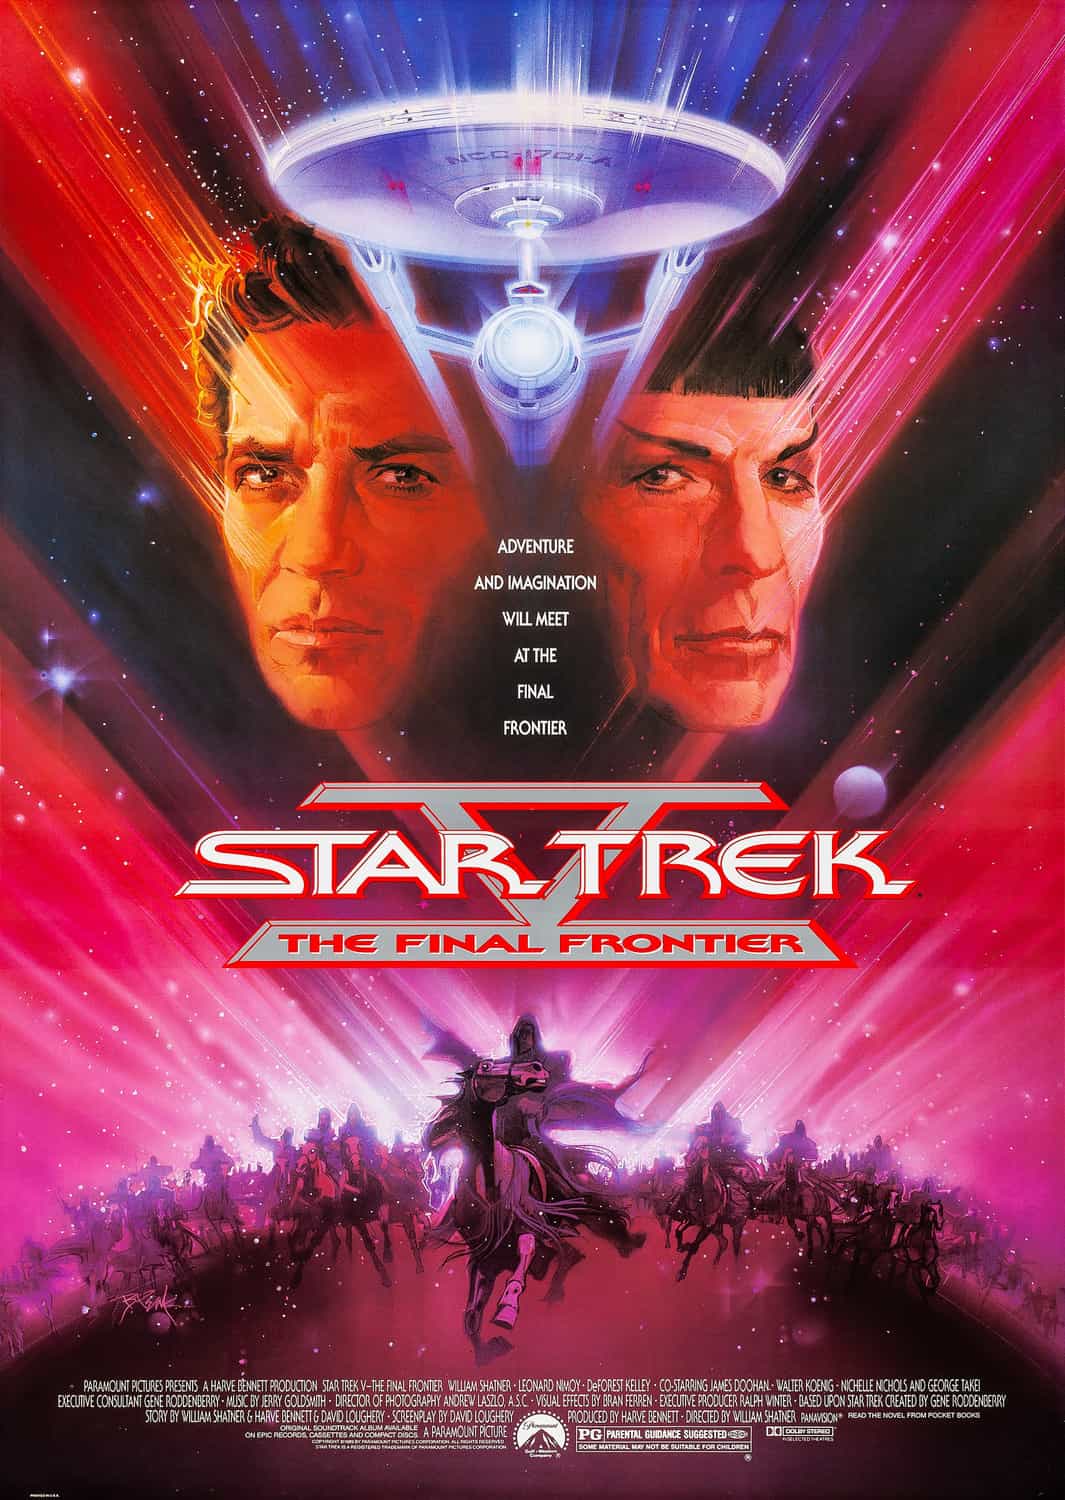 TrekWeb.com wants William Shatner's directors cut Star Trek V